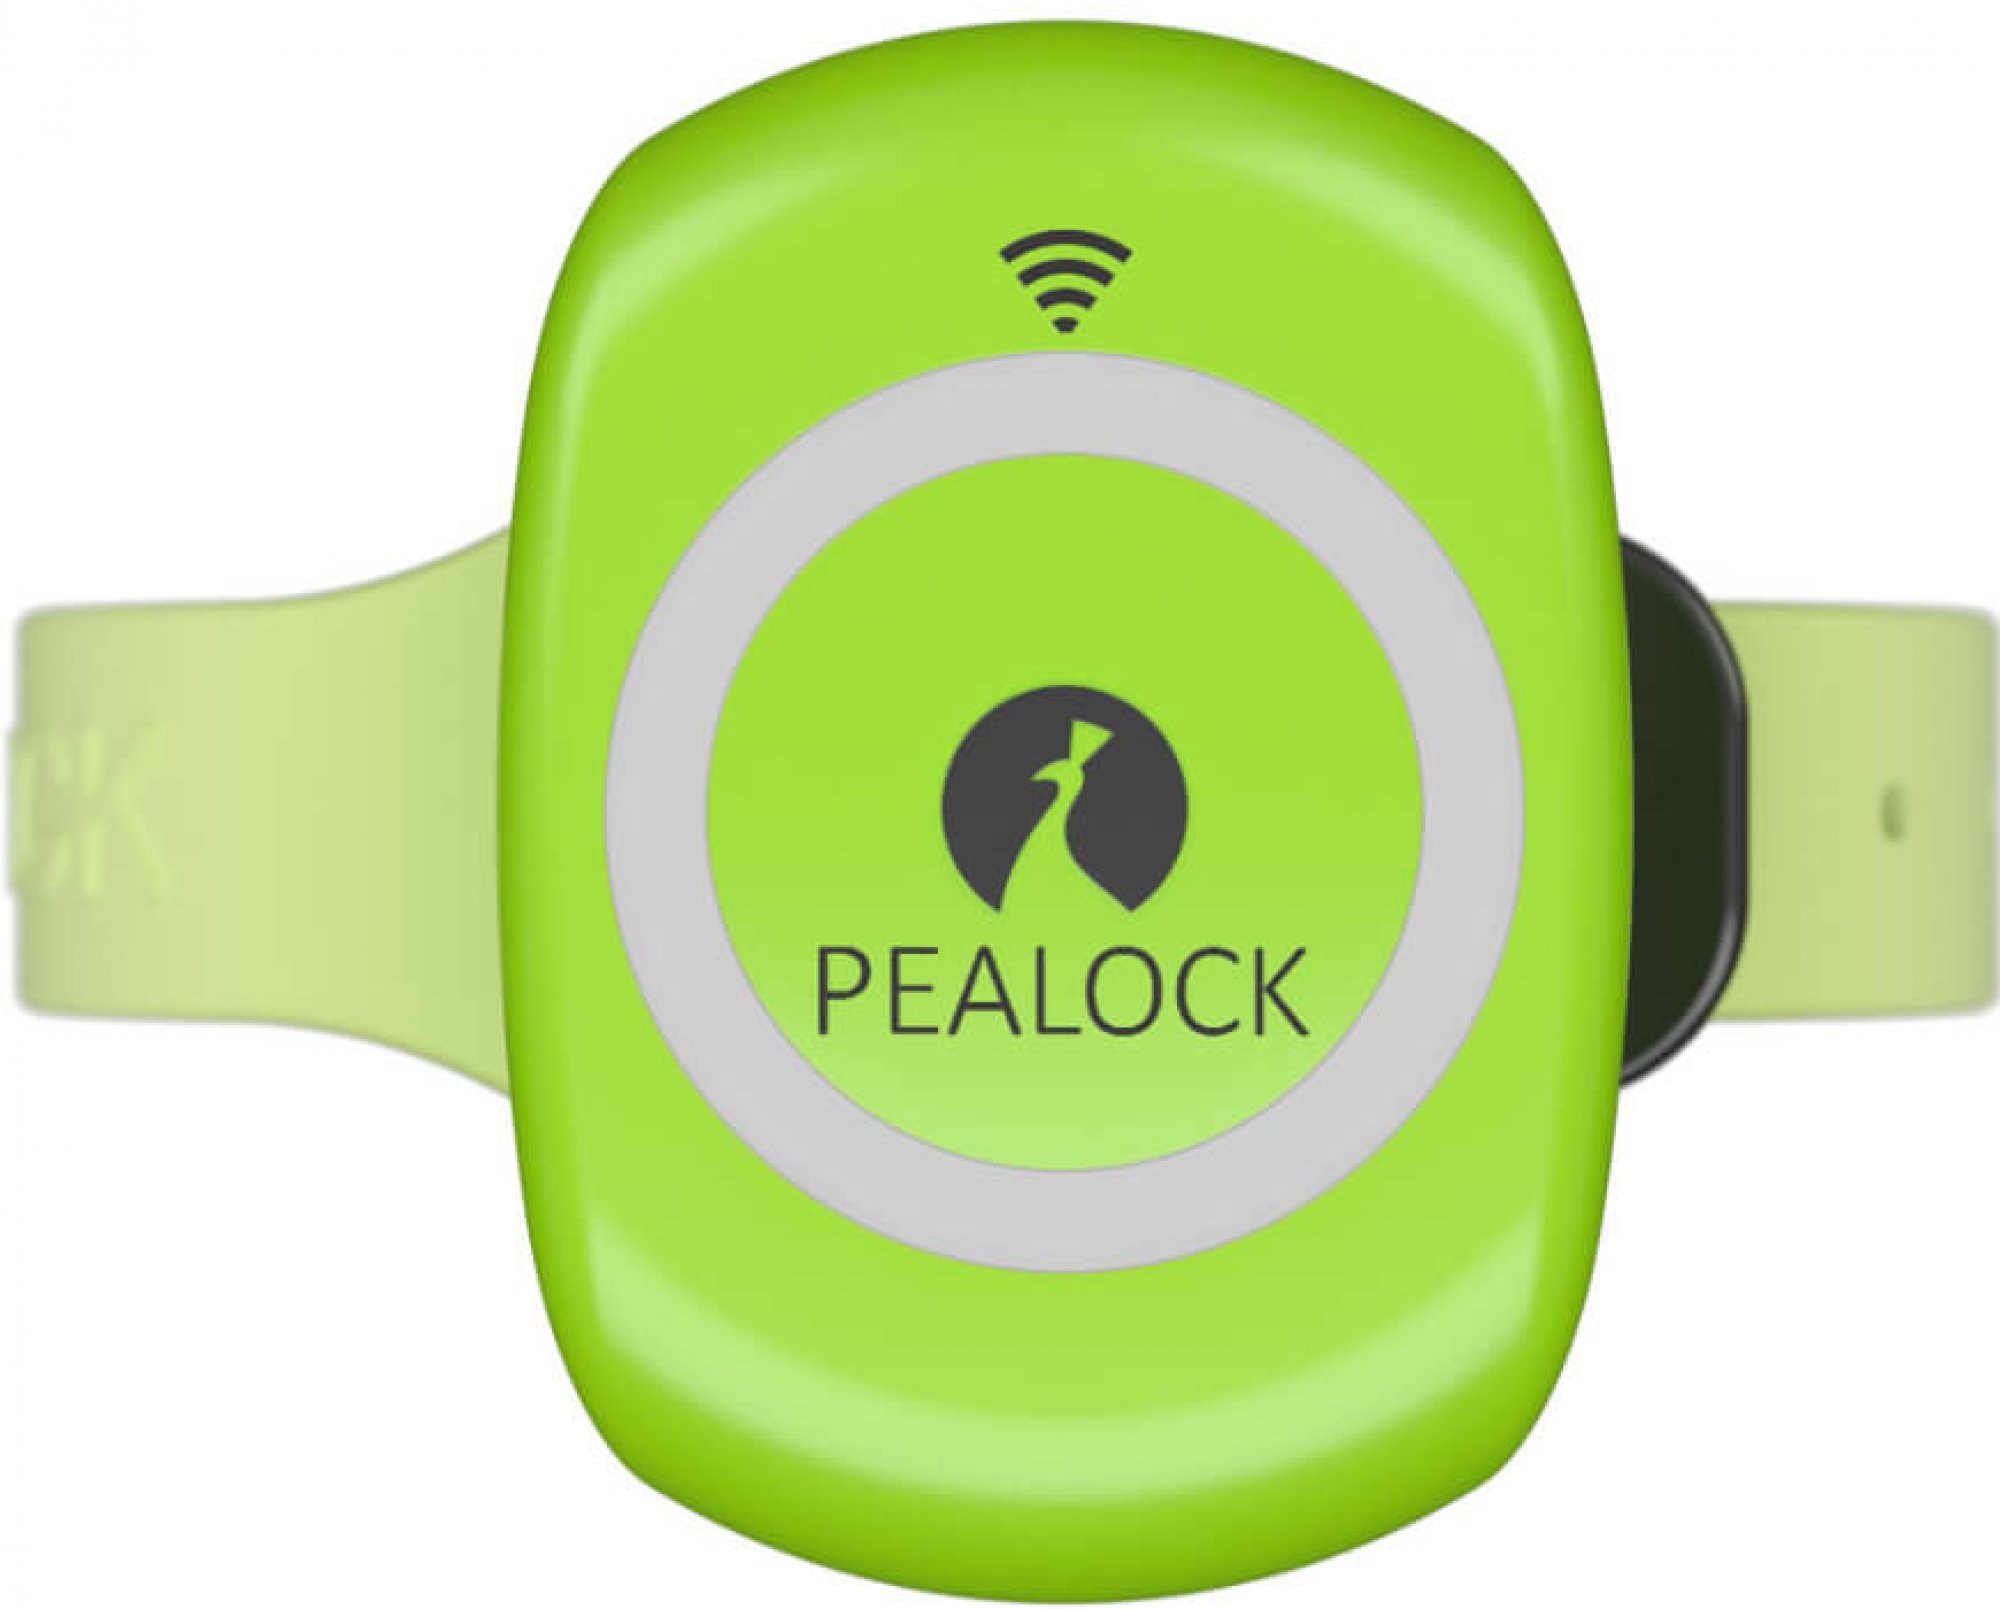 Pealock 2 elektronický zámek, barva zelená